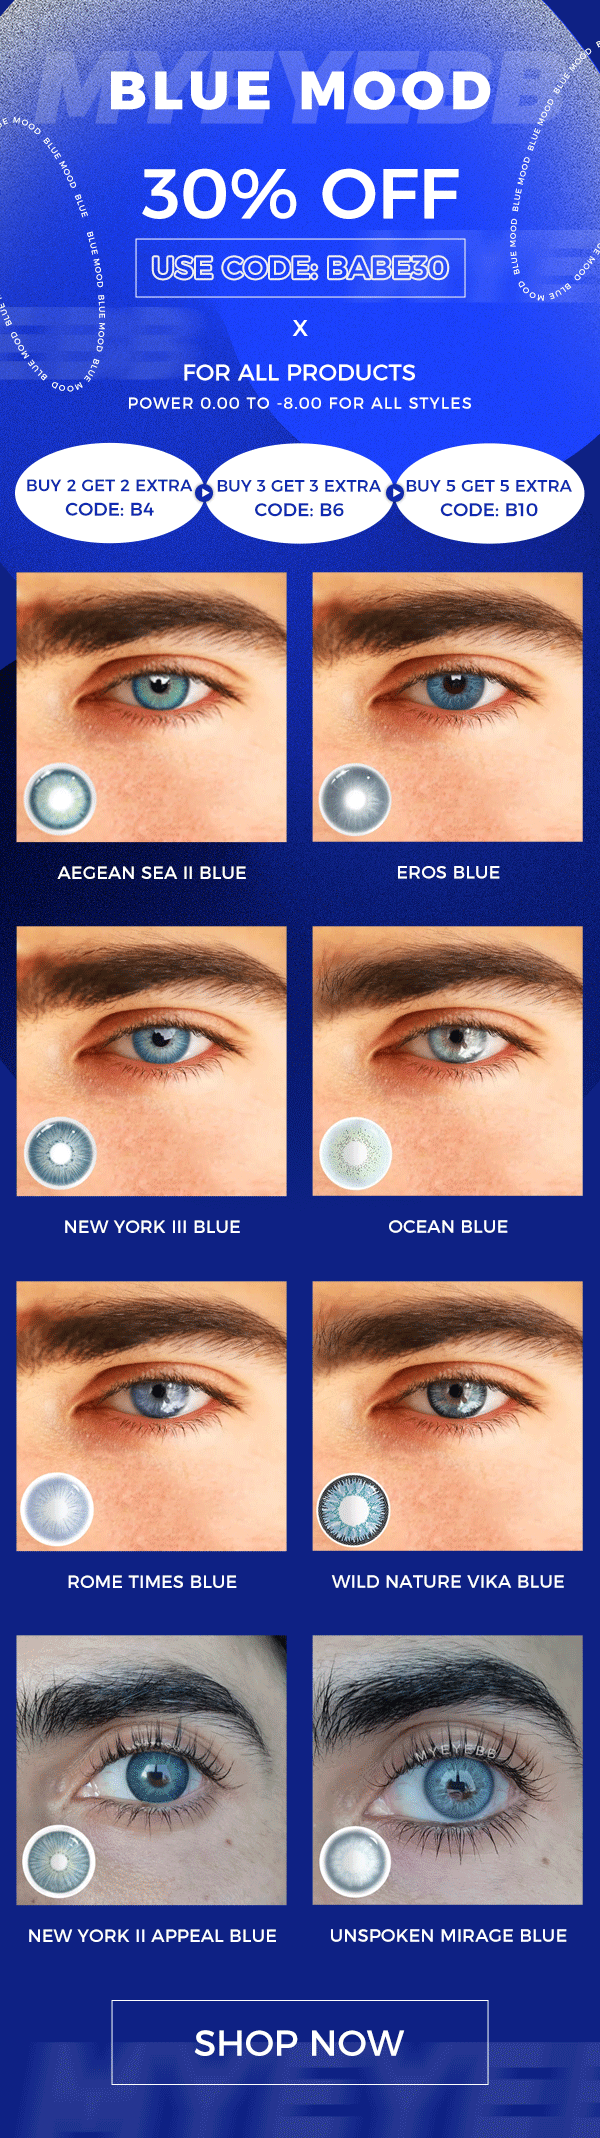  AEGEAN SEA Il BLUE EROS BLUE NEW YORK Il BLUE OCEAN BLUE NEW YORK Il APPEAL BLUE UNSPOKEN MIRAGE BLUE SHOP NOW 